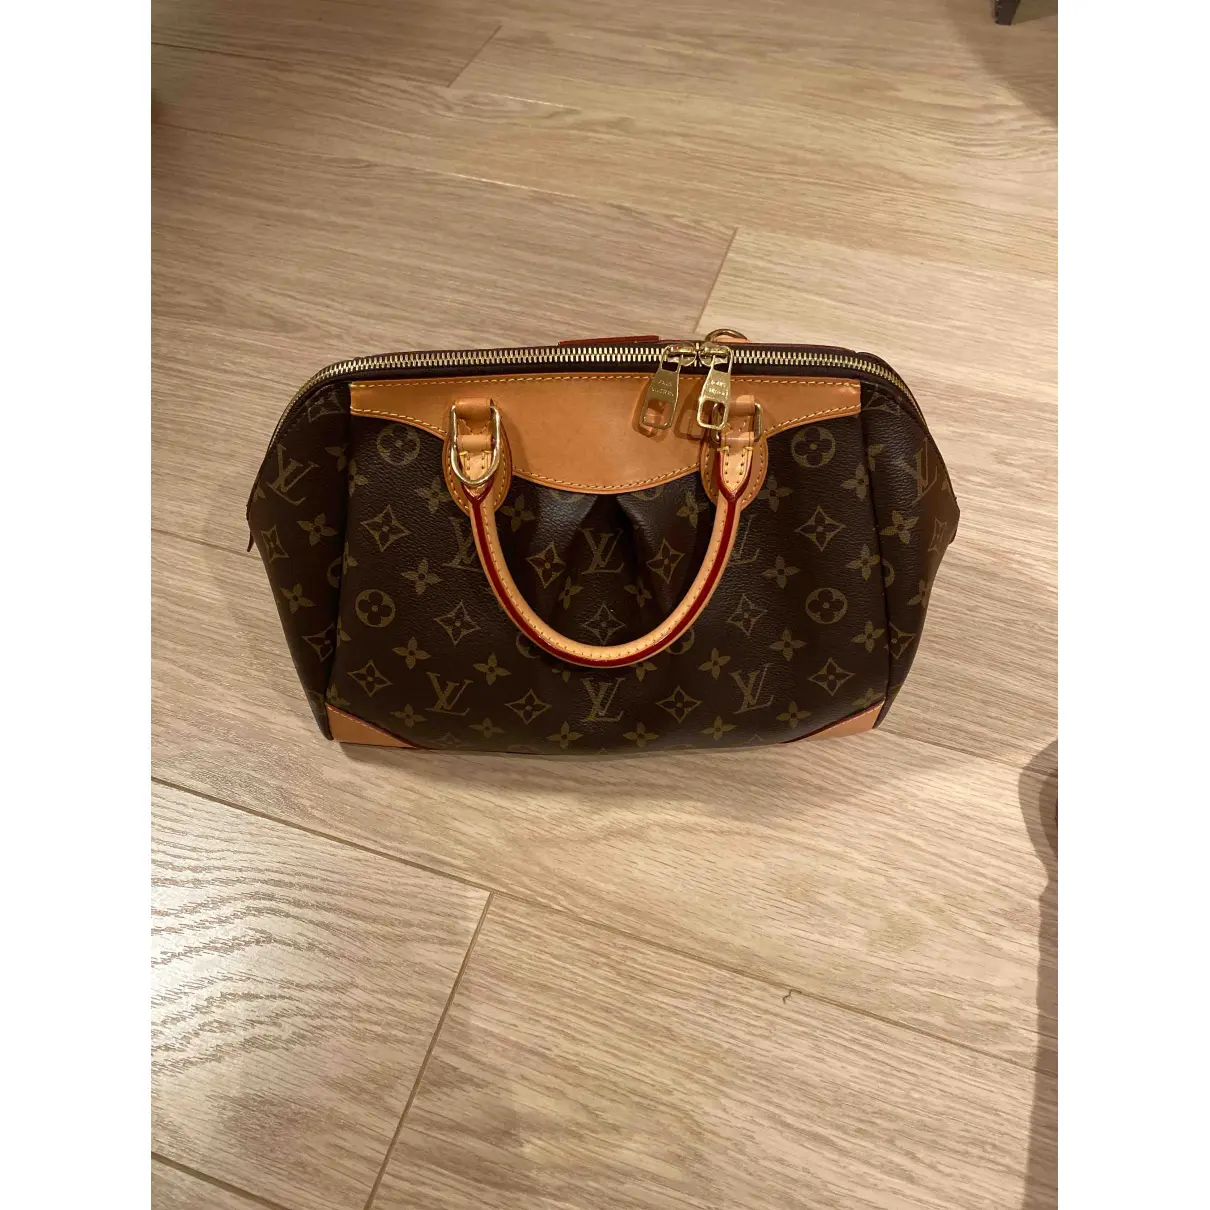 Buy Louis Vuitton Segur cloth crossbody bag online